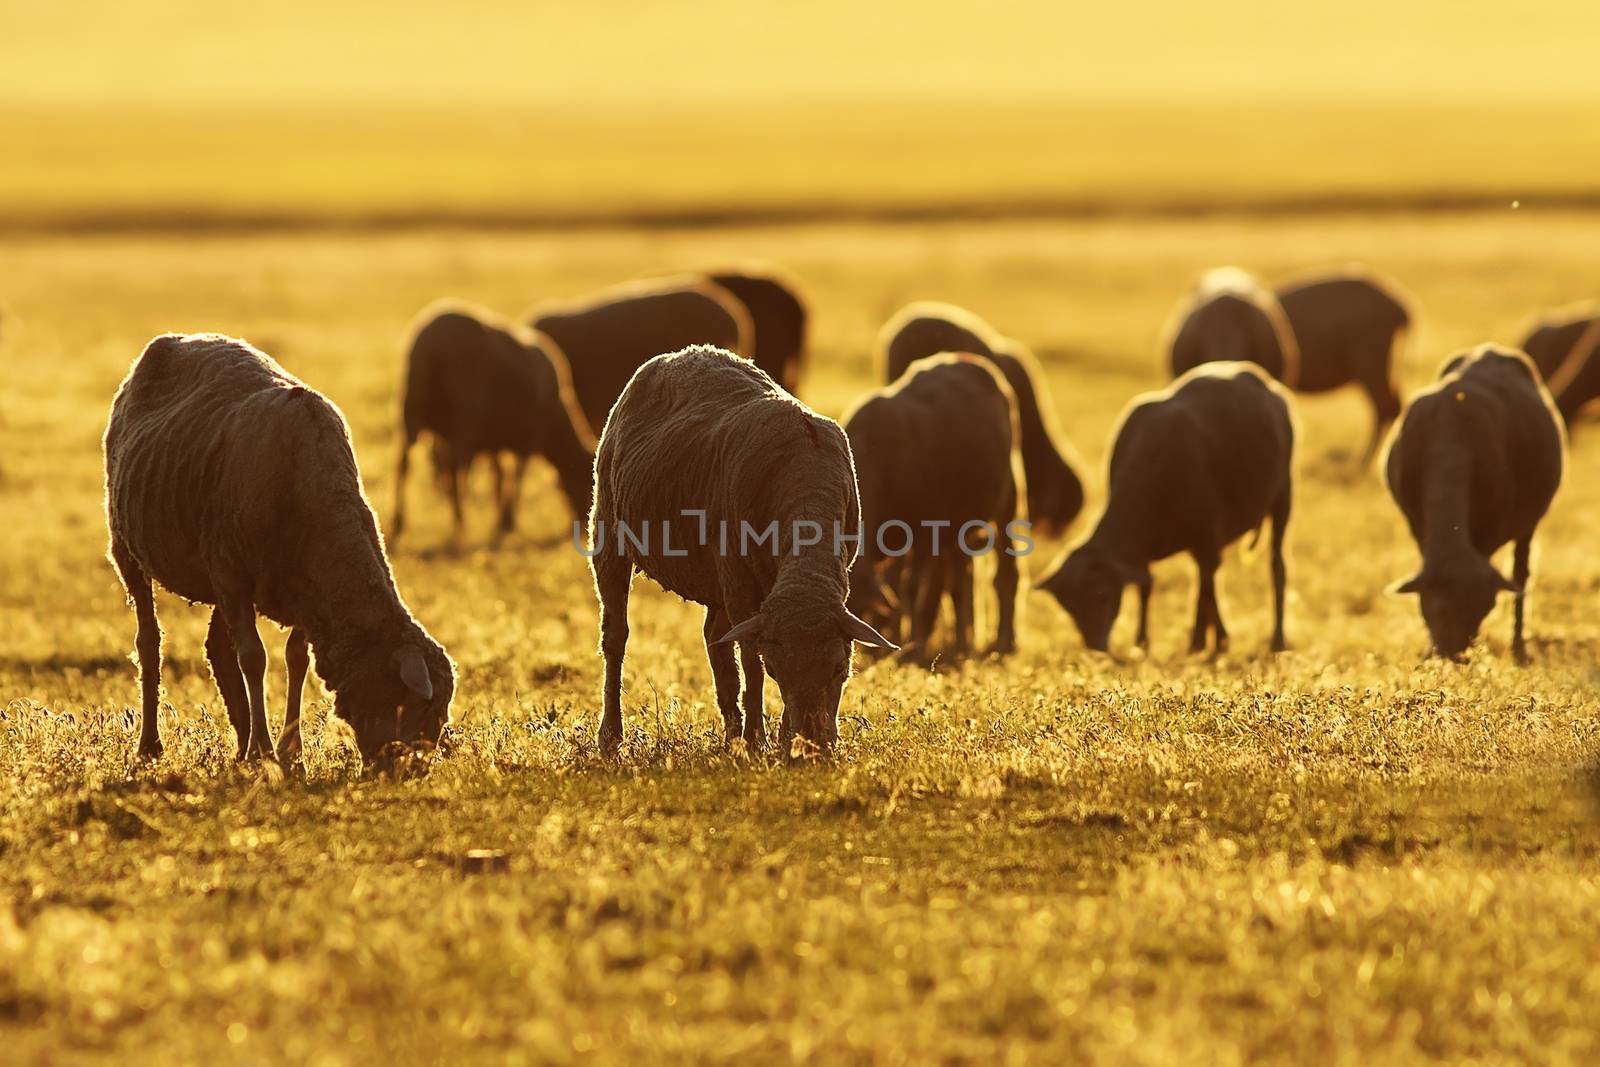 sheep herd in sunrise orange light, image taken near the farm at dawn